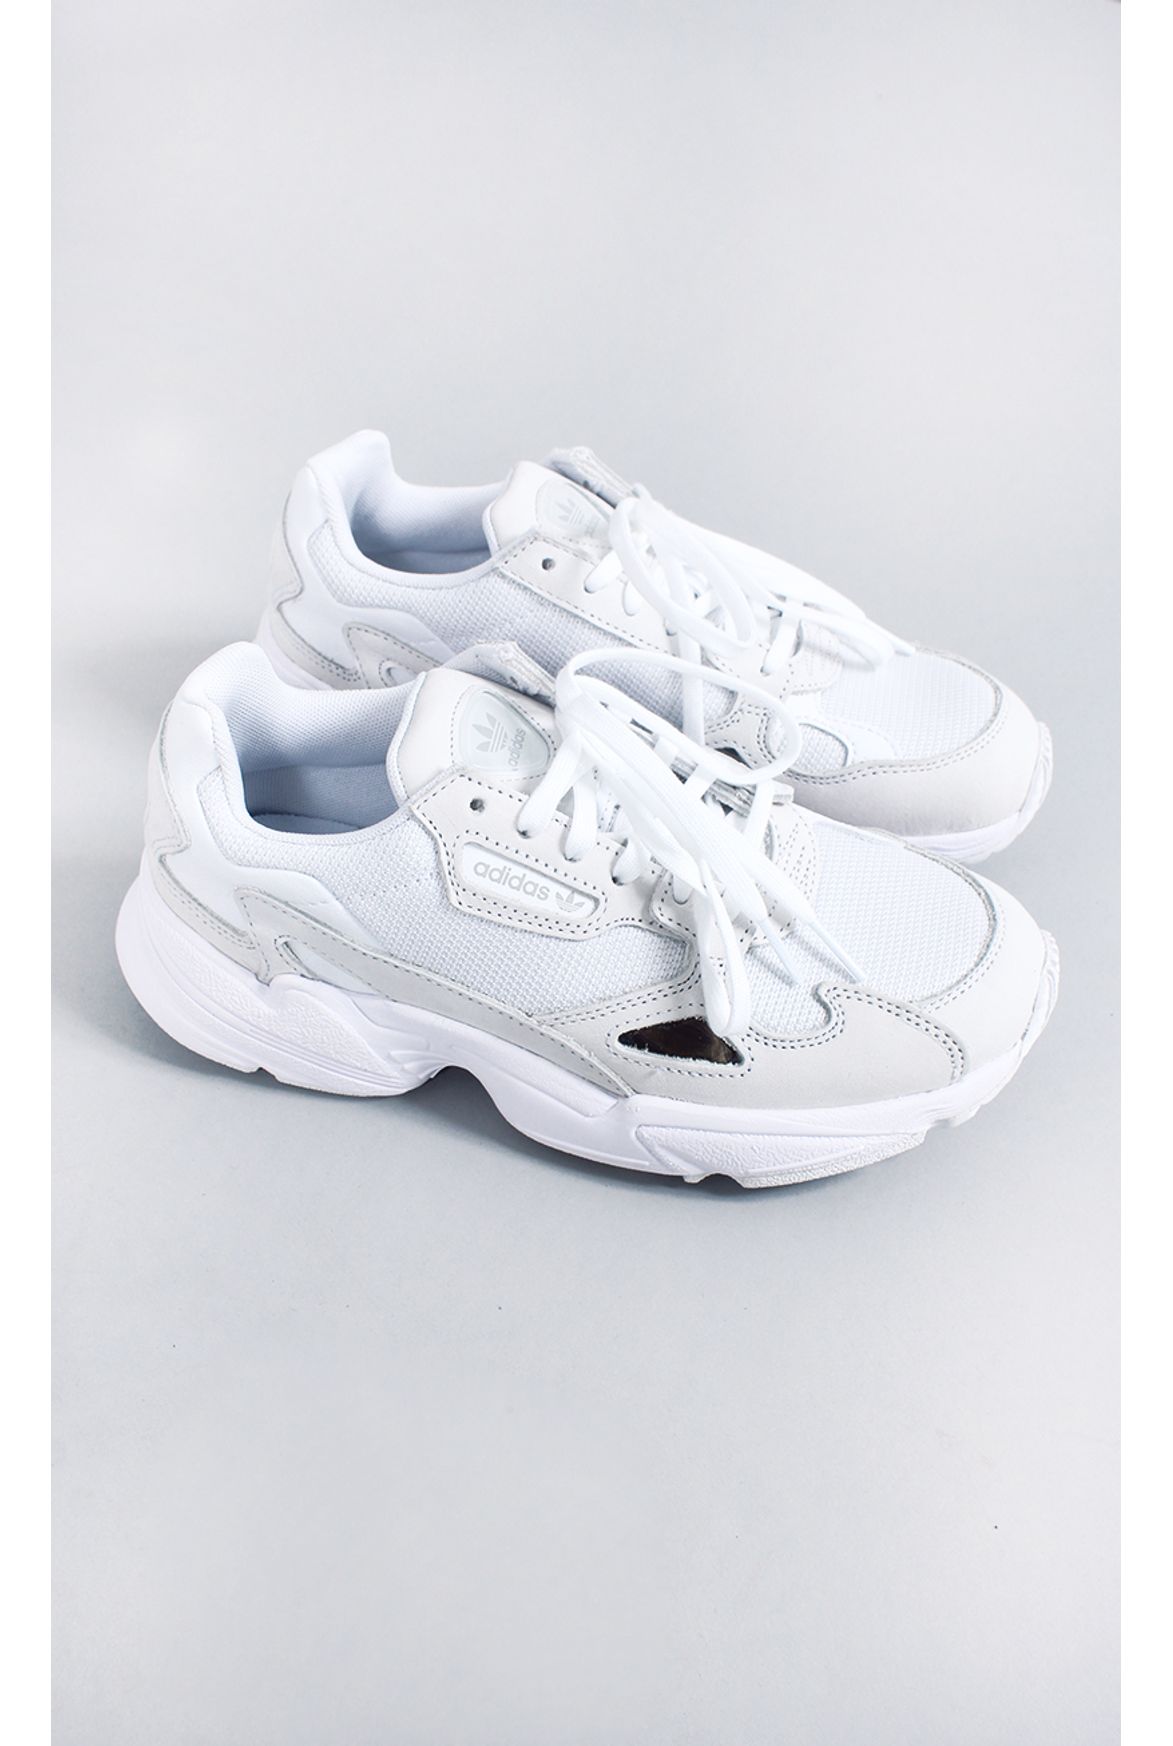 adidas falcon bae w buy clothes shoes 